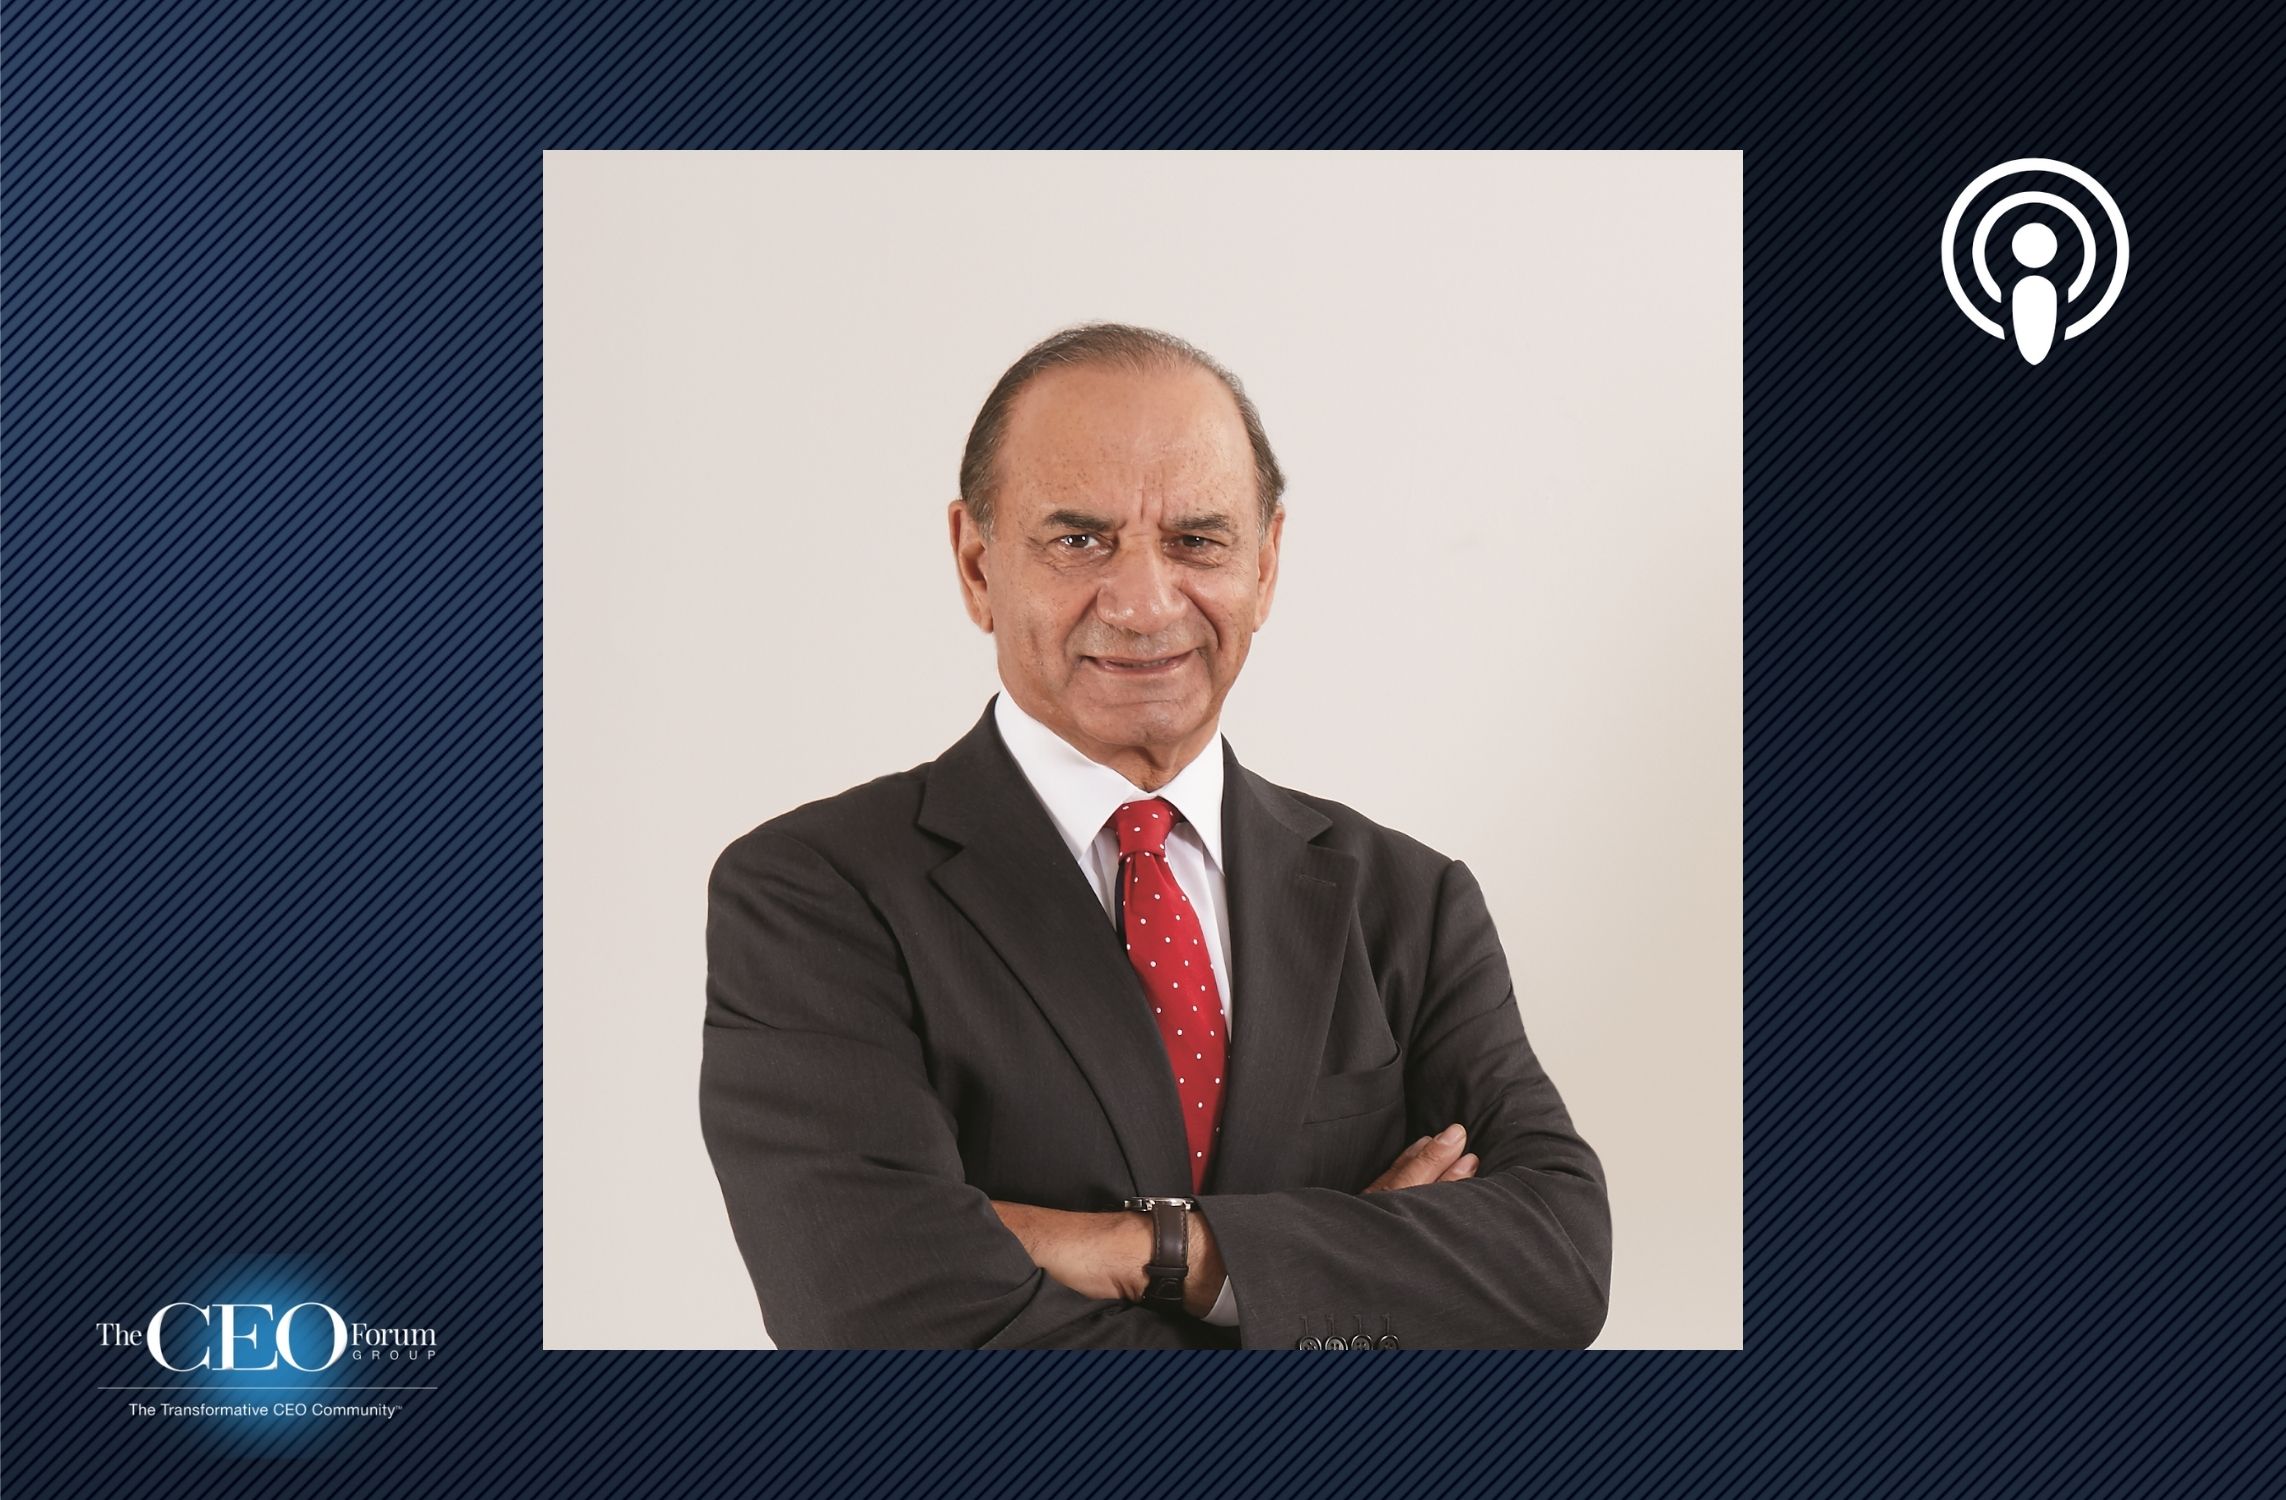 Farooq Kathwari, Chairman, President & Principal Executive Officer, Ethan Allen Interiors Inc.